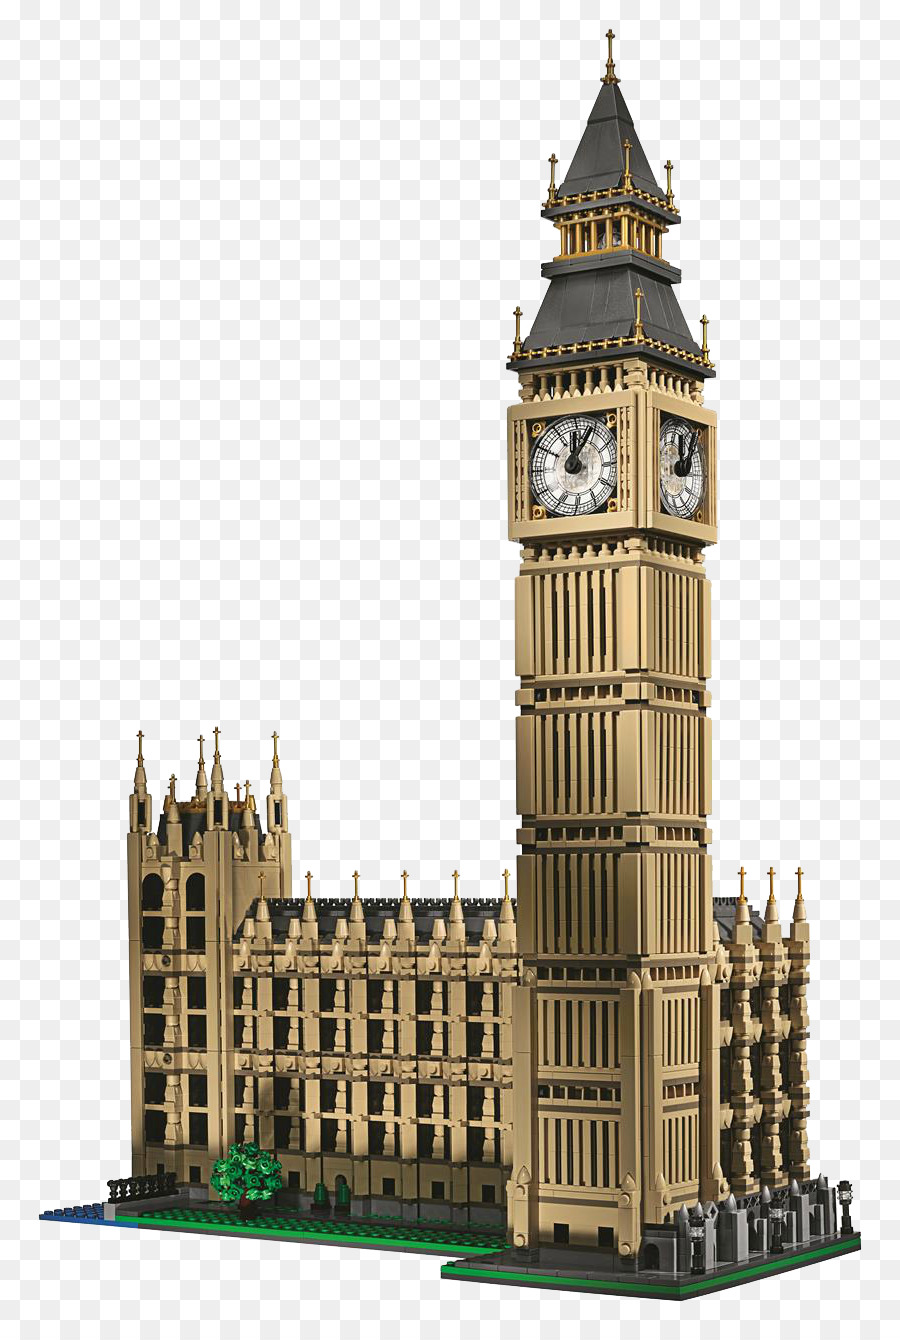 Big Ben im Palace of Westminster, Houses of Parliament Shop Lego Creator - Big Ben PNG-Datei